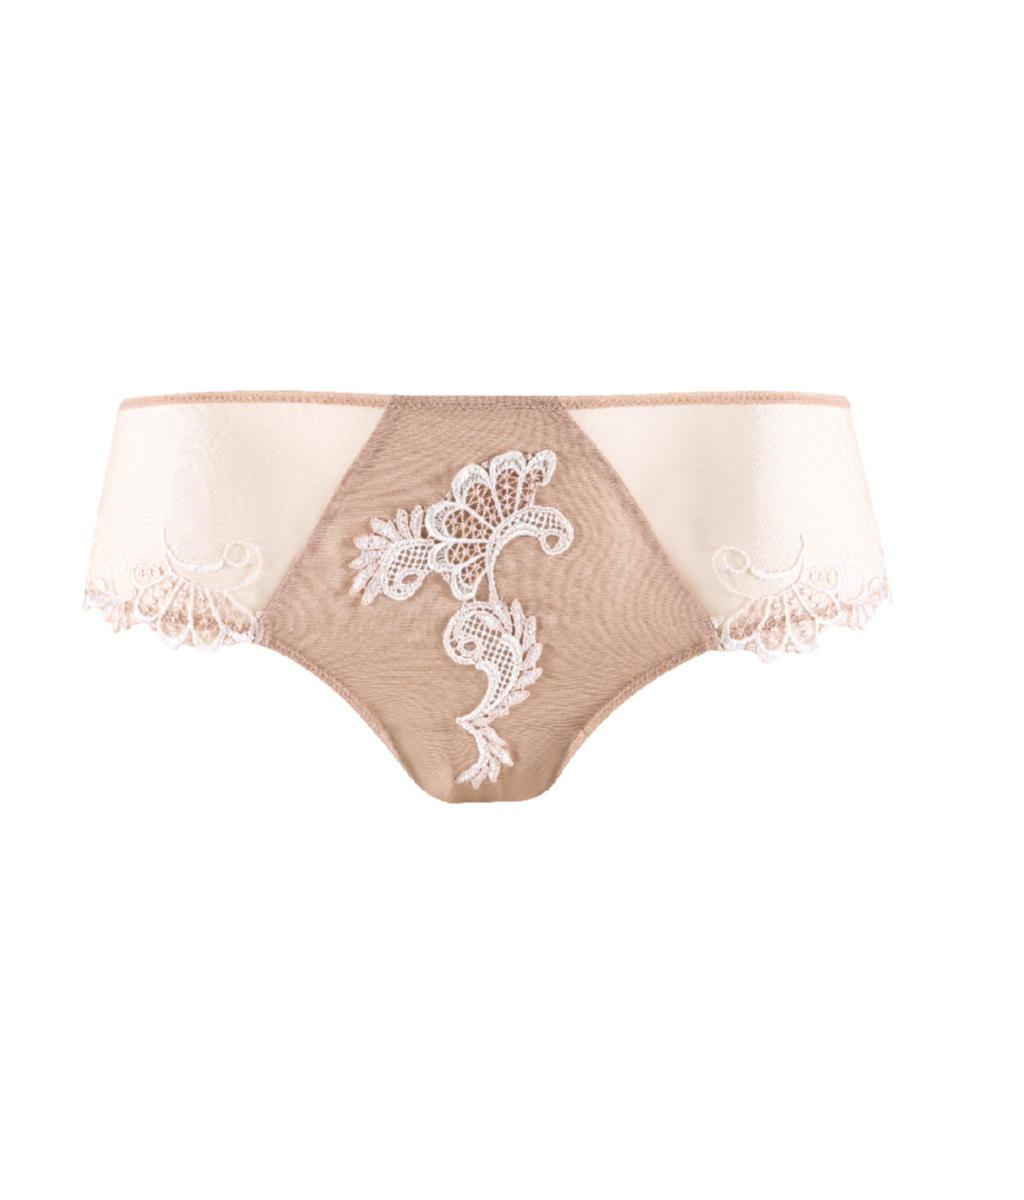 Eprise 'Guipure Charming' (Ambre Nacre) Culotte (Shorts) - Sandra Dee - Product Shot - Front